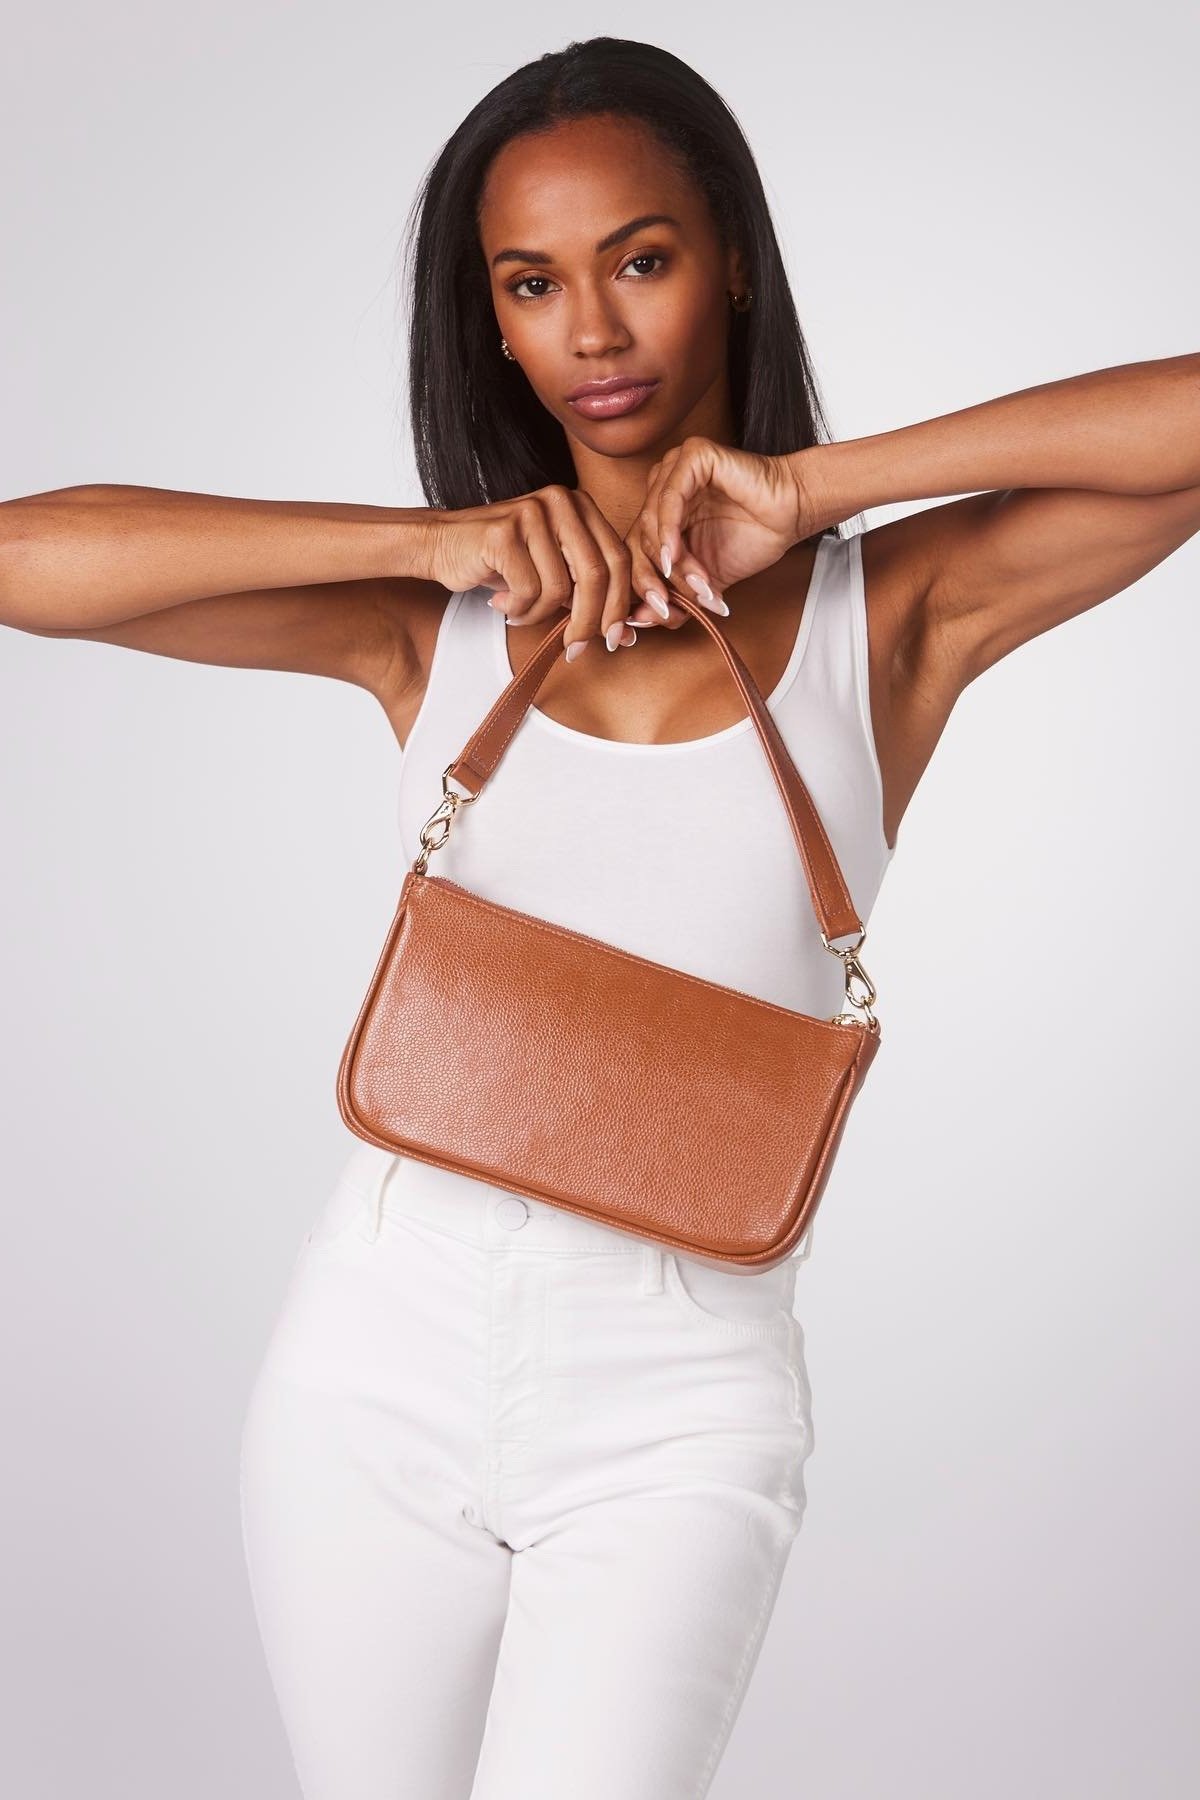 APHISON Crossbody Bags For Women Trendy, Vegan Leather Hobo Handbags  Crossbody Purses Shoulder Bucket Bag with 2 Adjustable Strap Black-Brown -  Yahoo Shopping